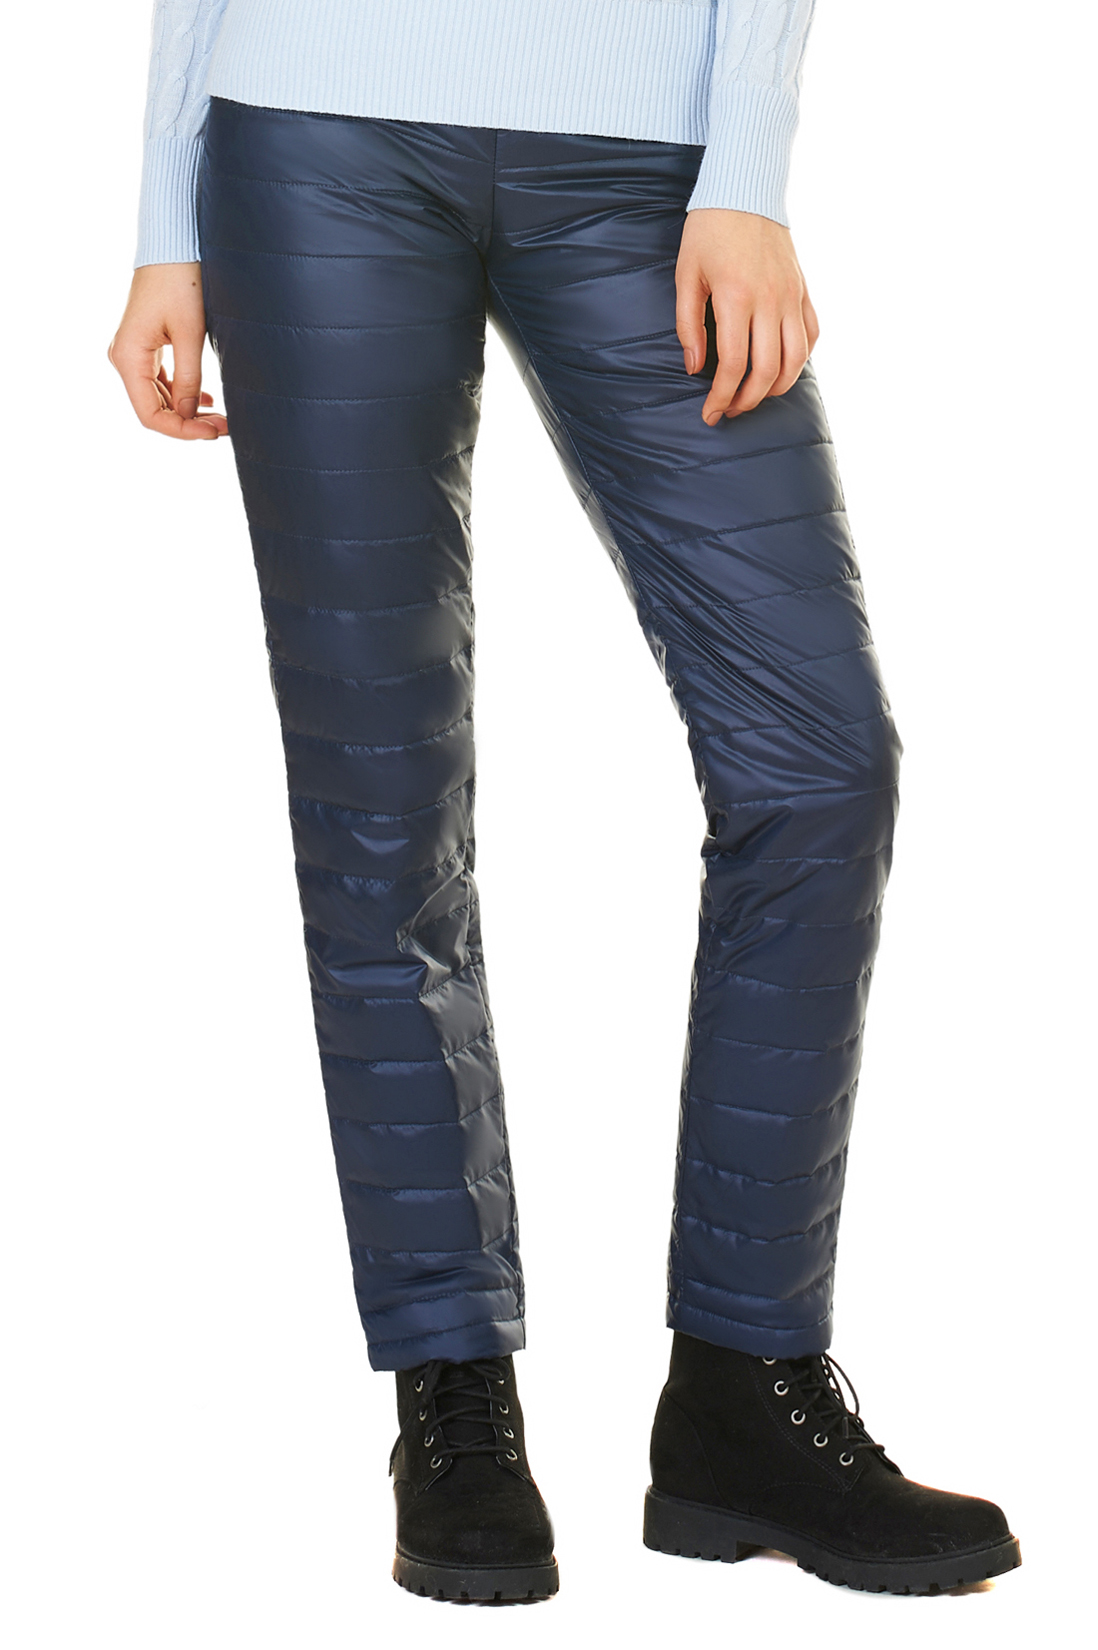 Утеплённые брюки без застёжки (арт. baon B297503), размер XL, цвет синий Утеплённые брюки без застёжки (арт. baon B297503) - фото 1